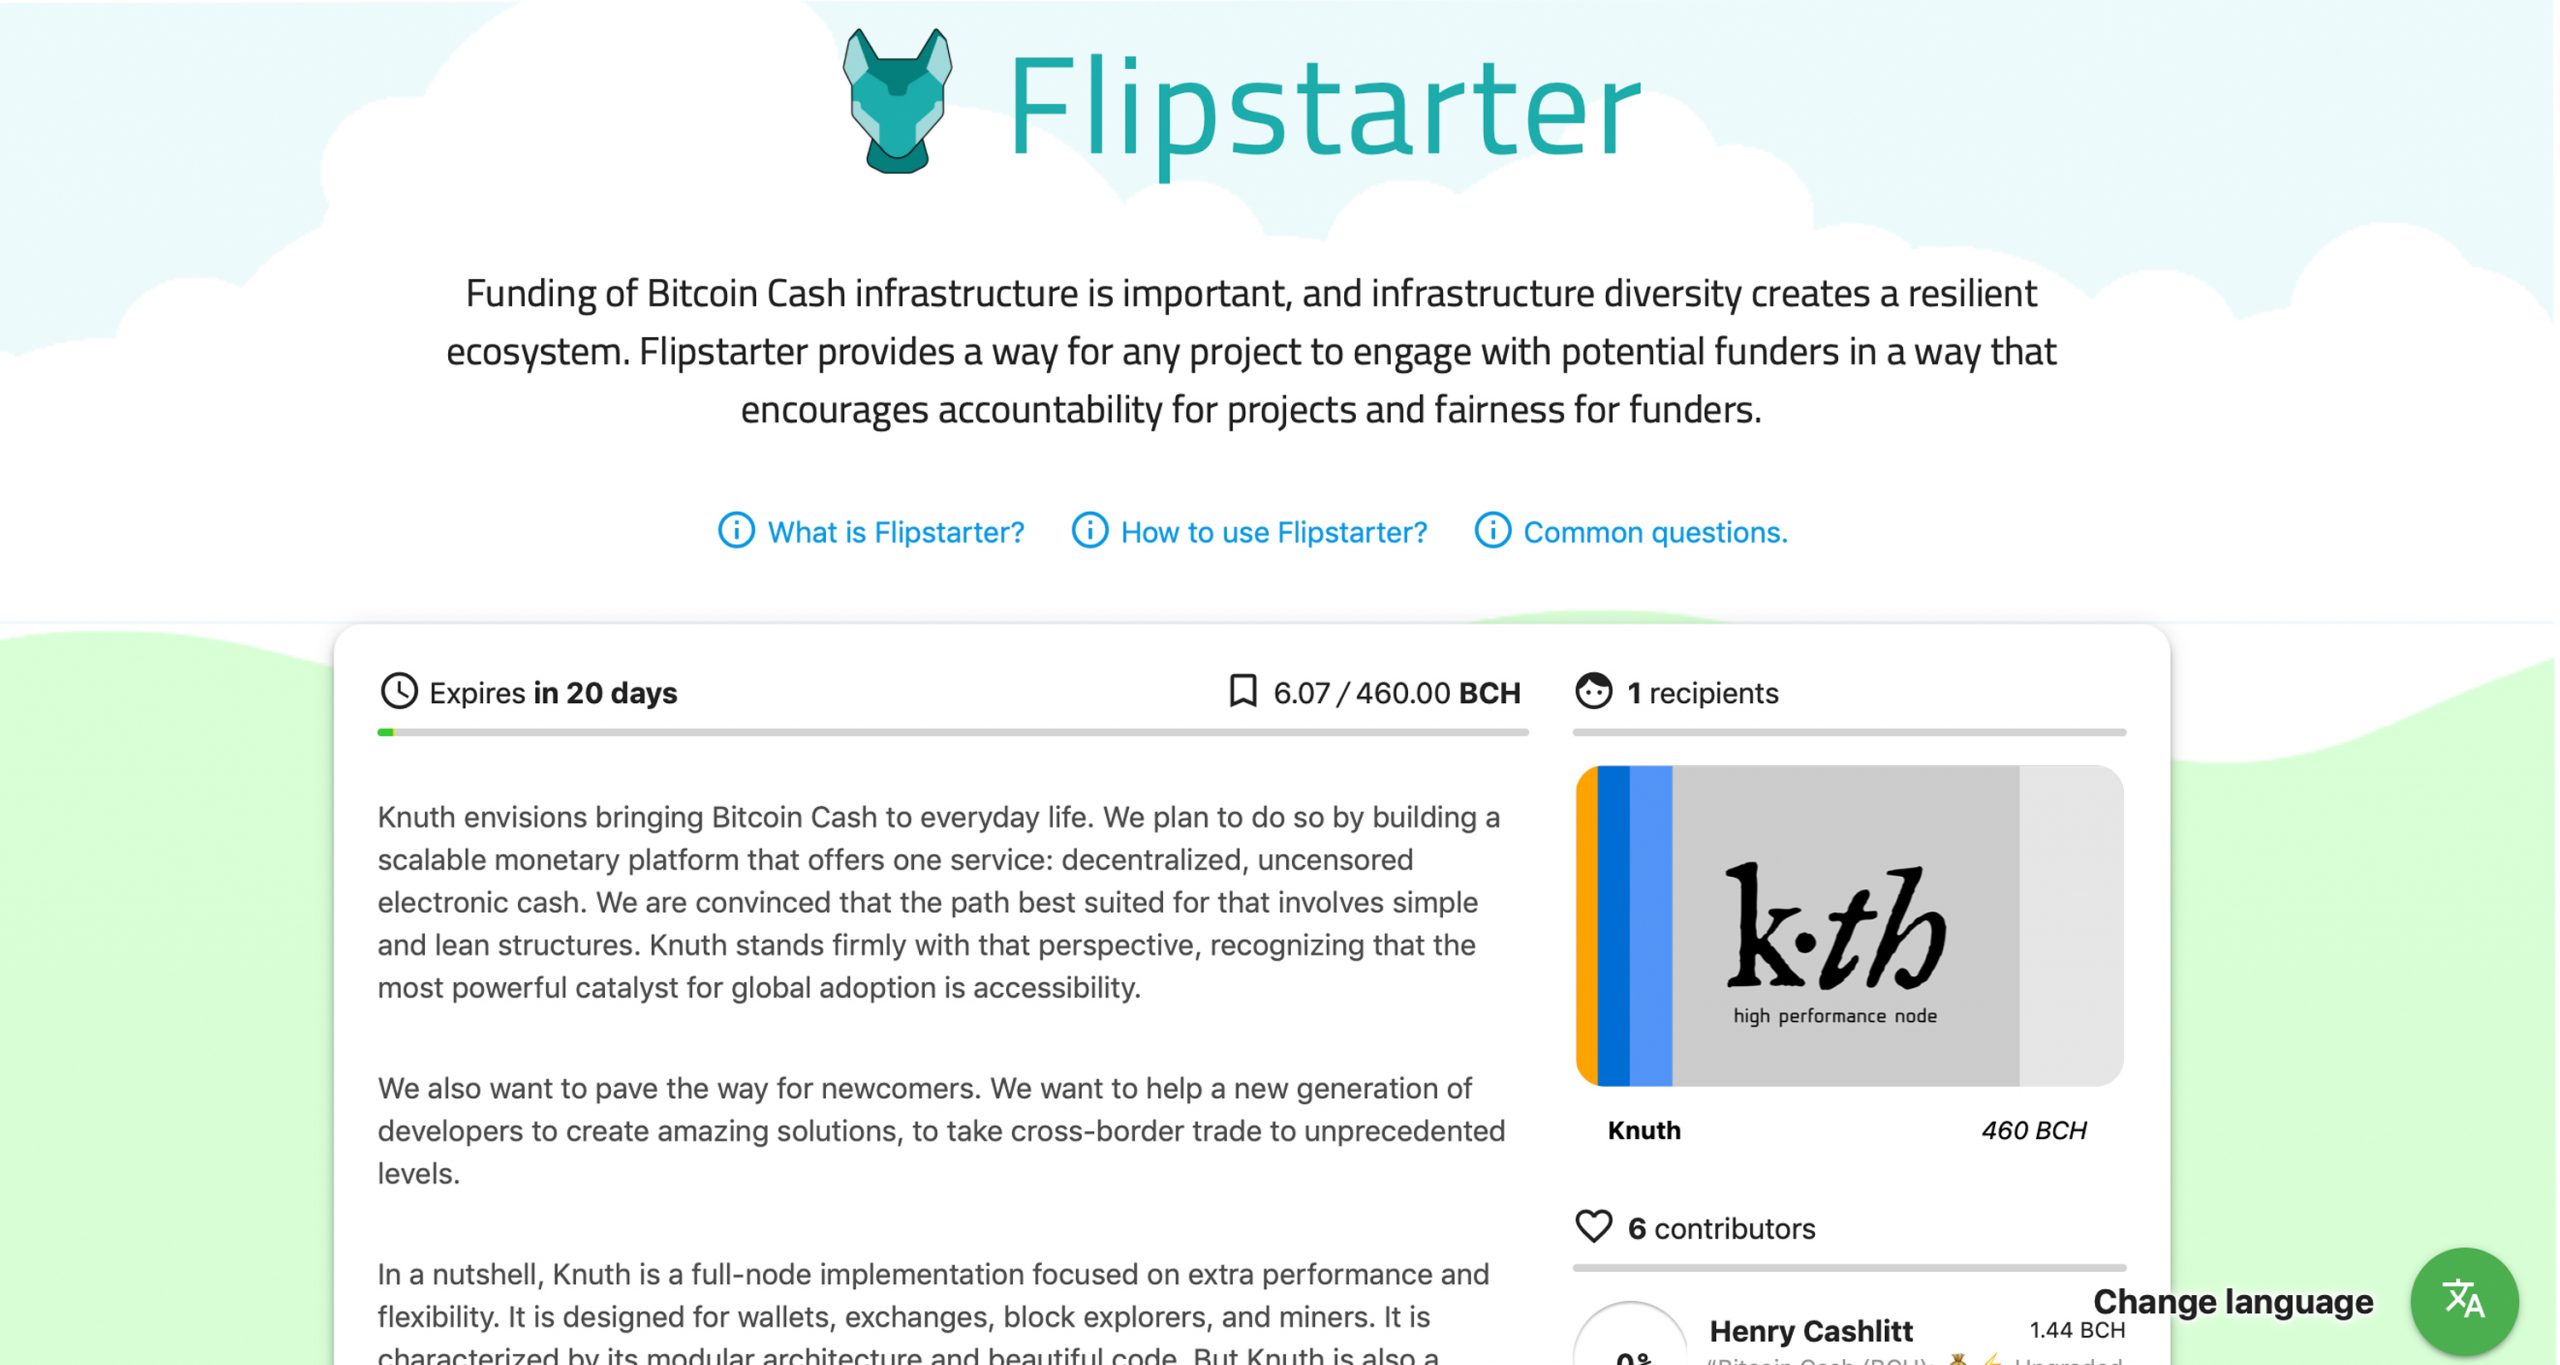 5 Bitcoin Cash Full Node Teams to Raise Funds With the Noncustodial Flipstarter App  1